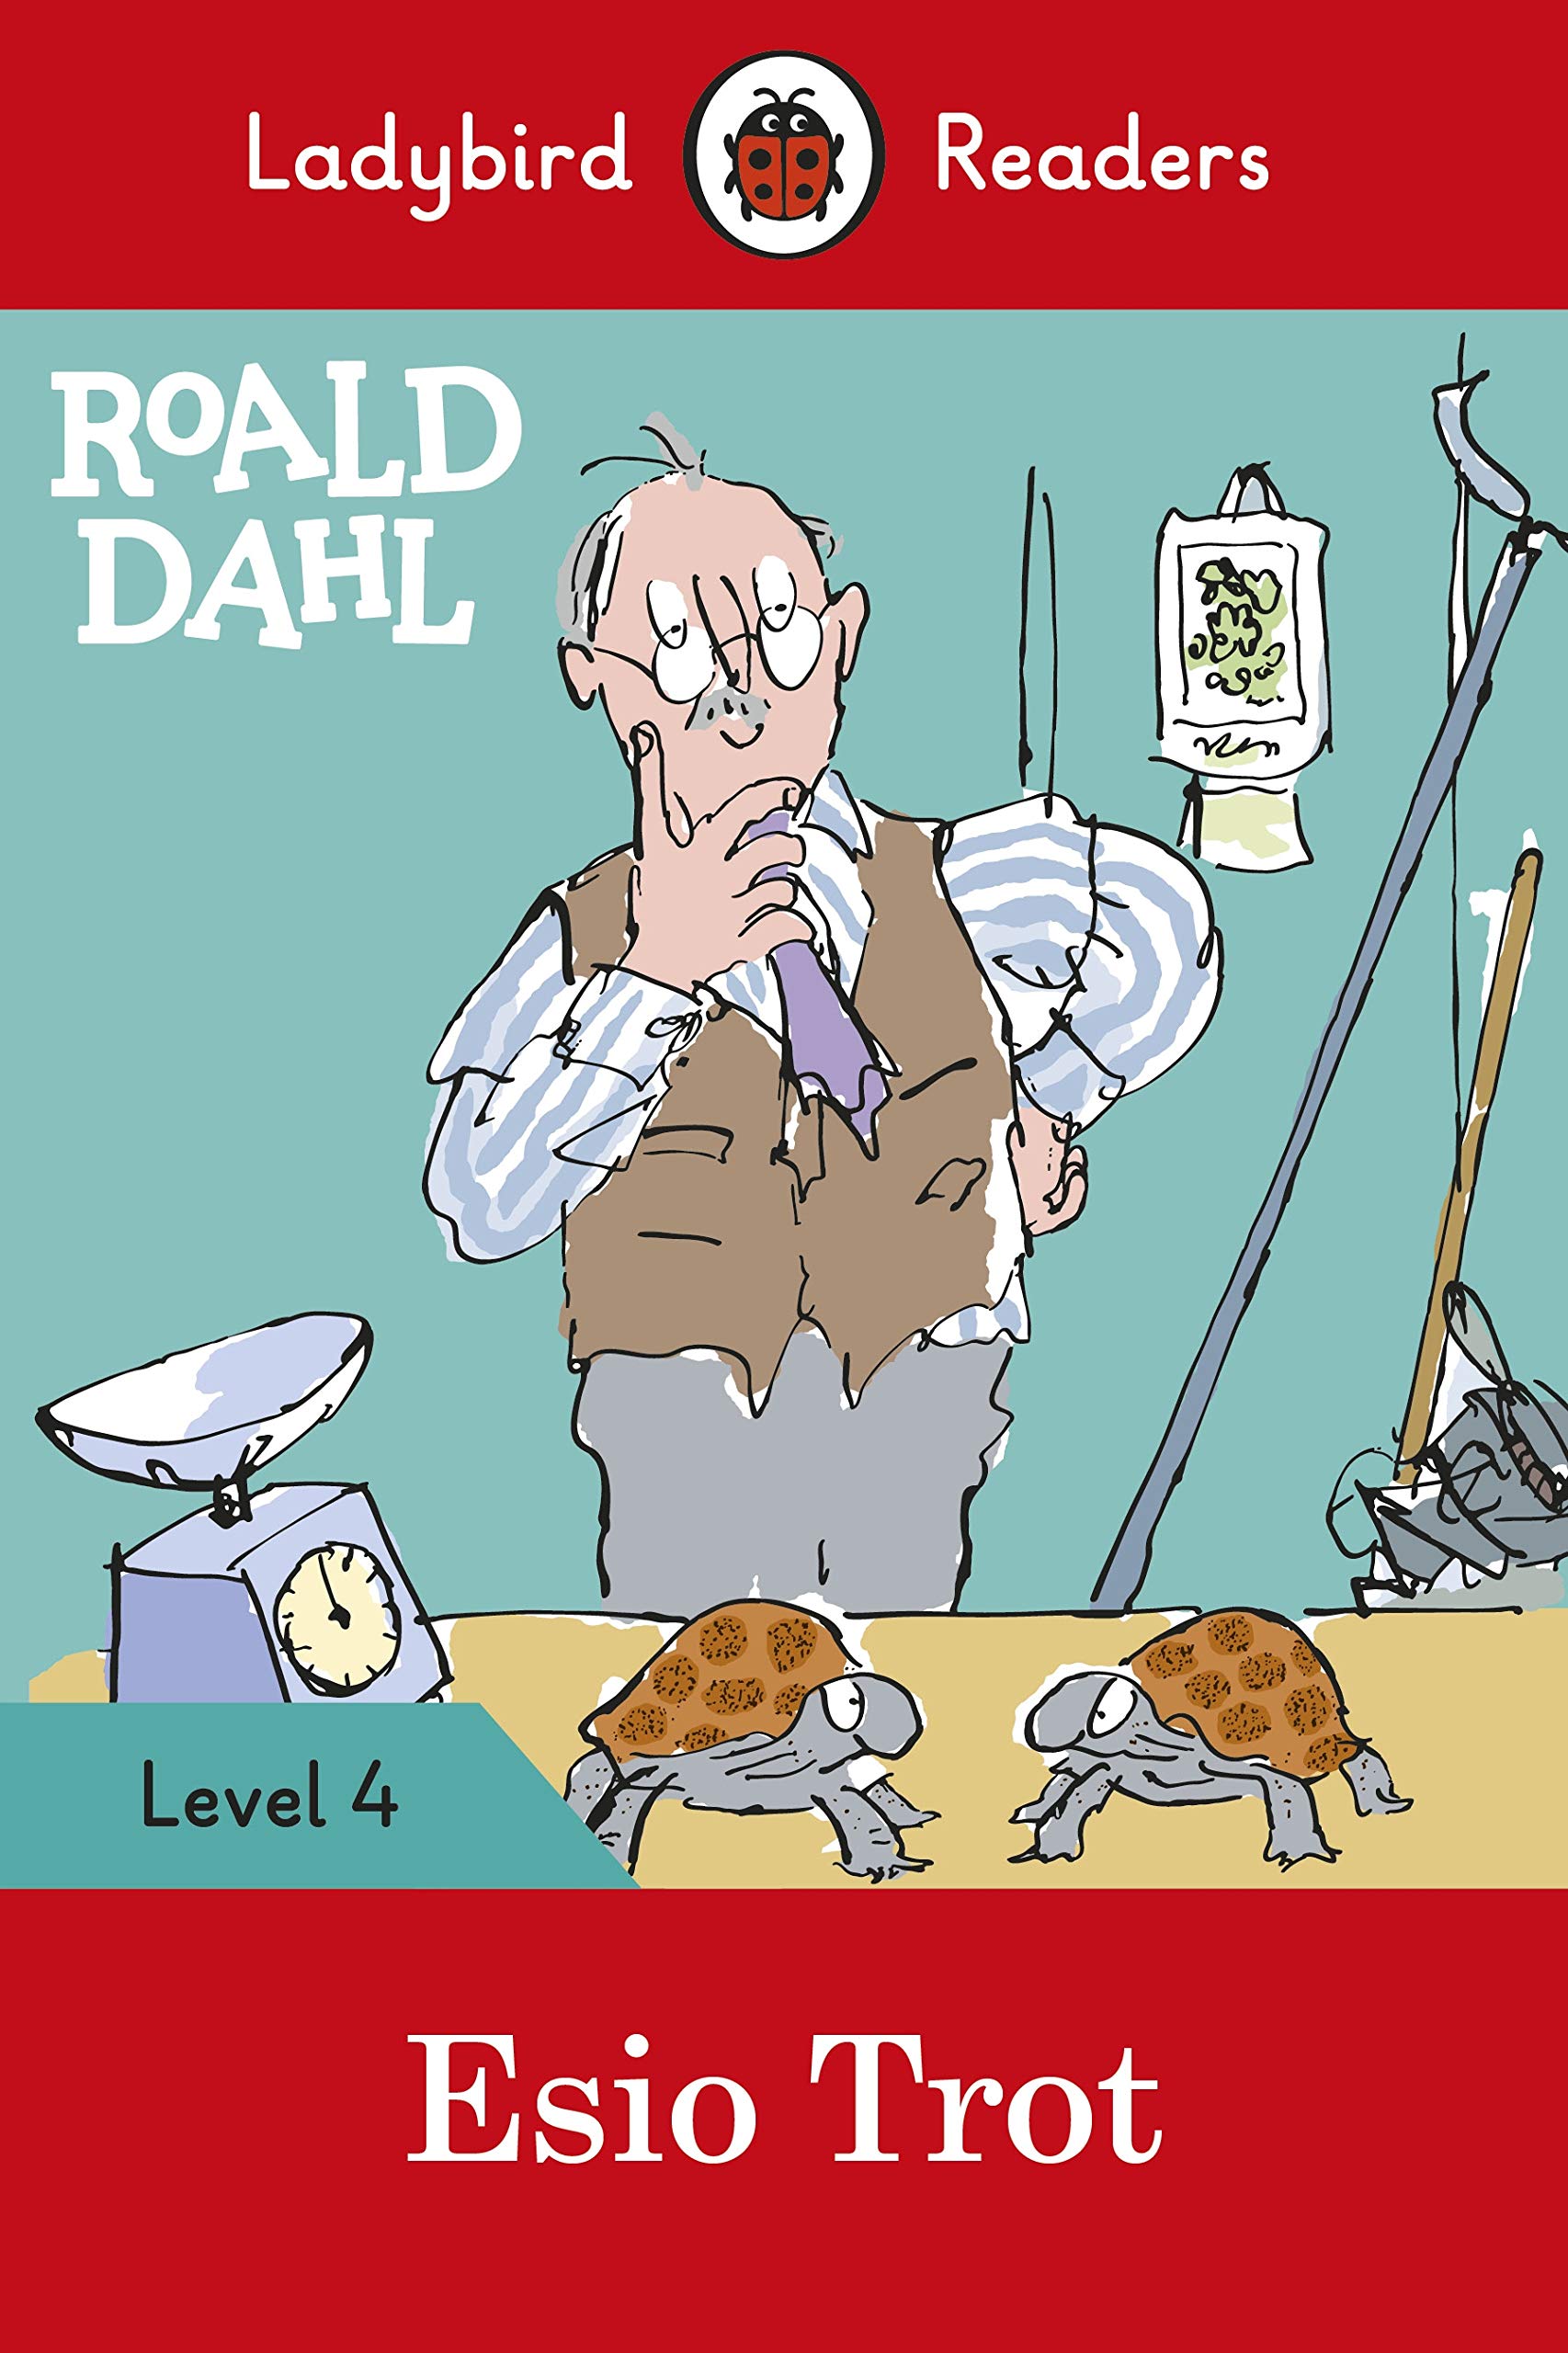 Ladybird Readers Level 4 : Roald Dahl - Esio Trot